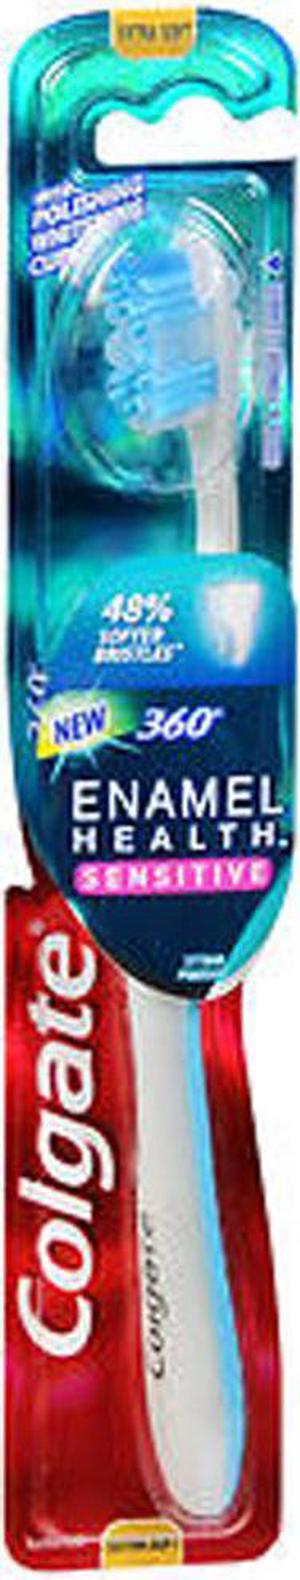 Colgate 360 Degrees Enamel Health Sensitive Toothbrush Extra Soft